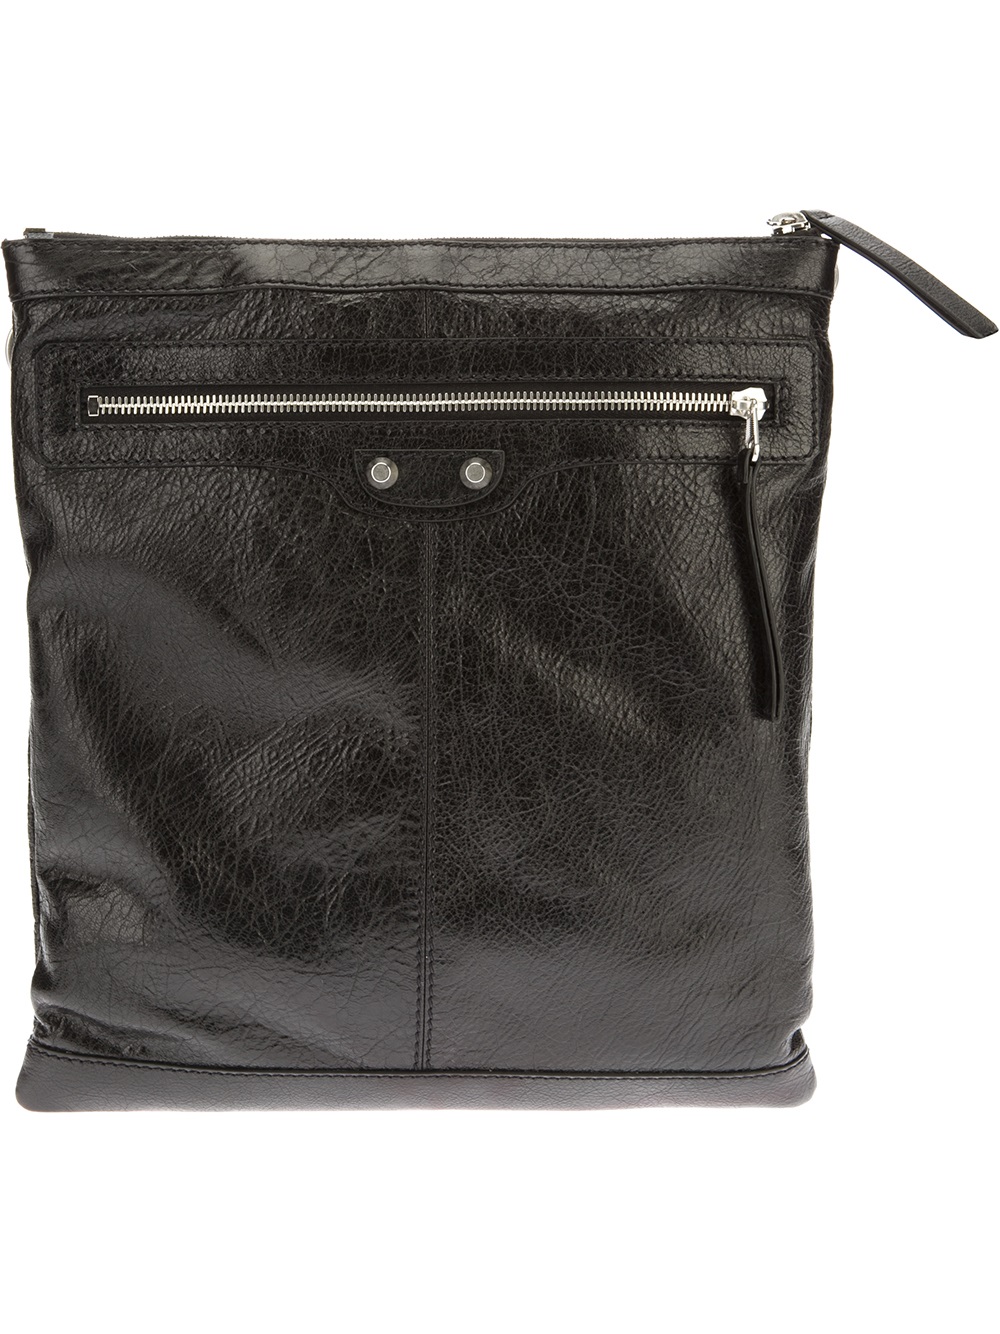 Lyst - Balenciaga Messenger Bag in Black for Men